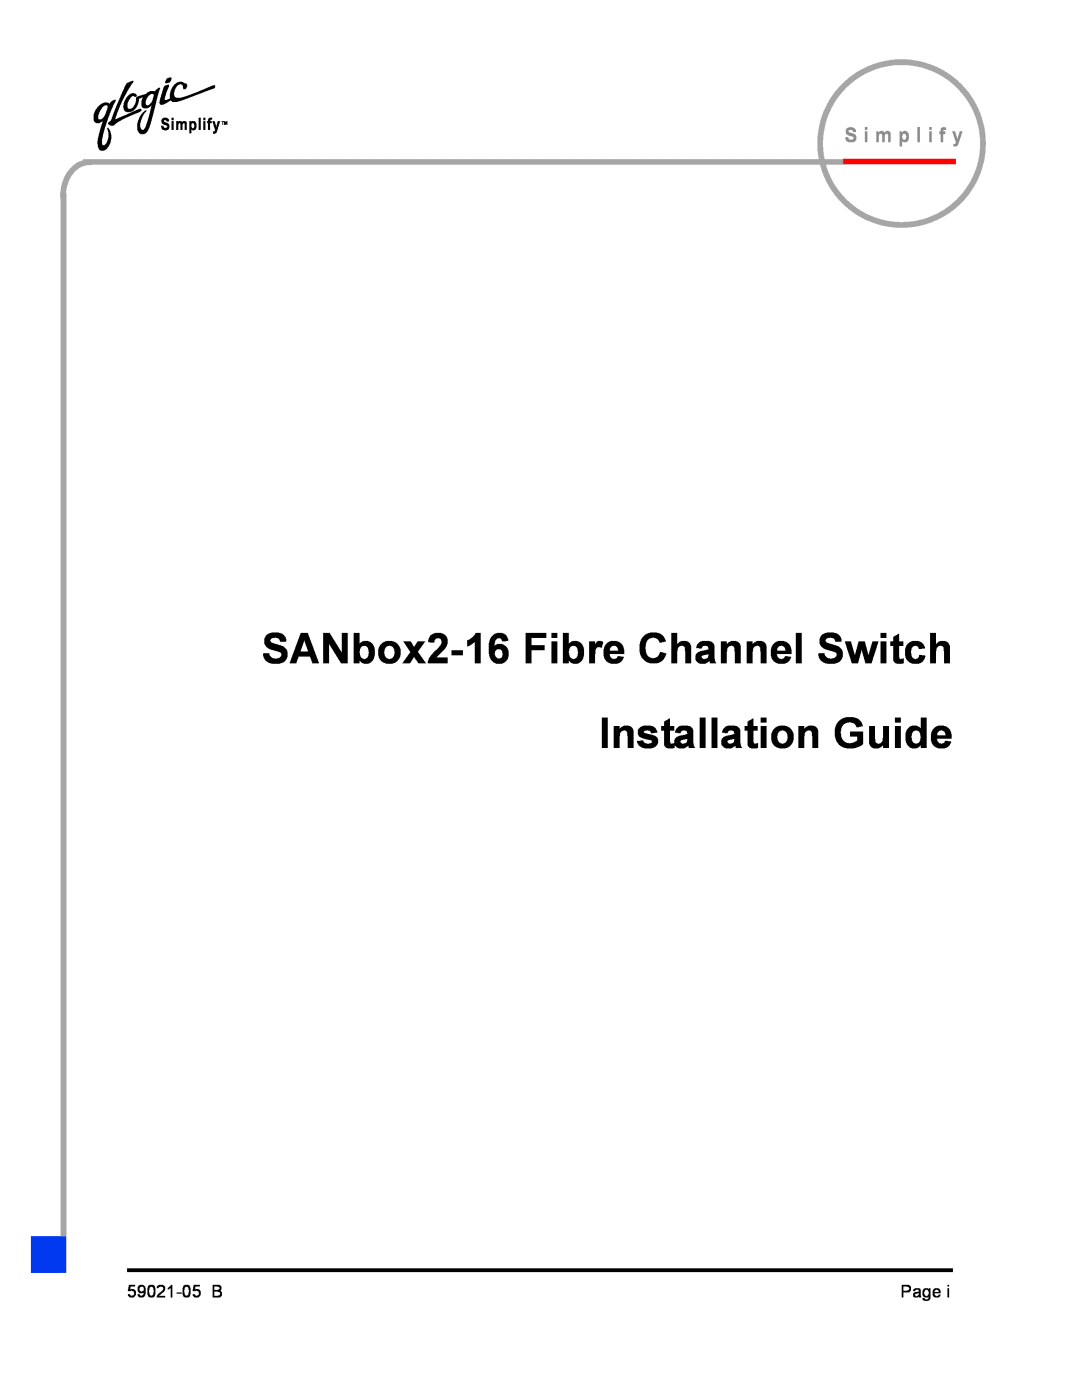 Q-Logic 59021-05 B manual SANbox2-16 Fibre Channel Switch Installation Guide, S i m p l i f y 